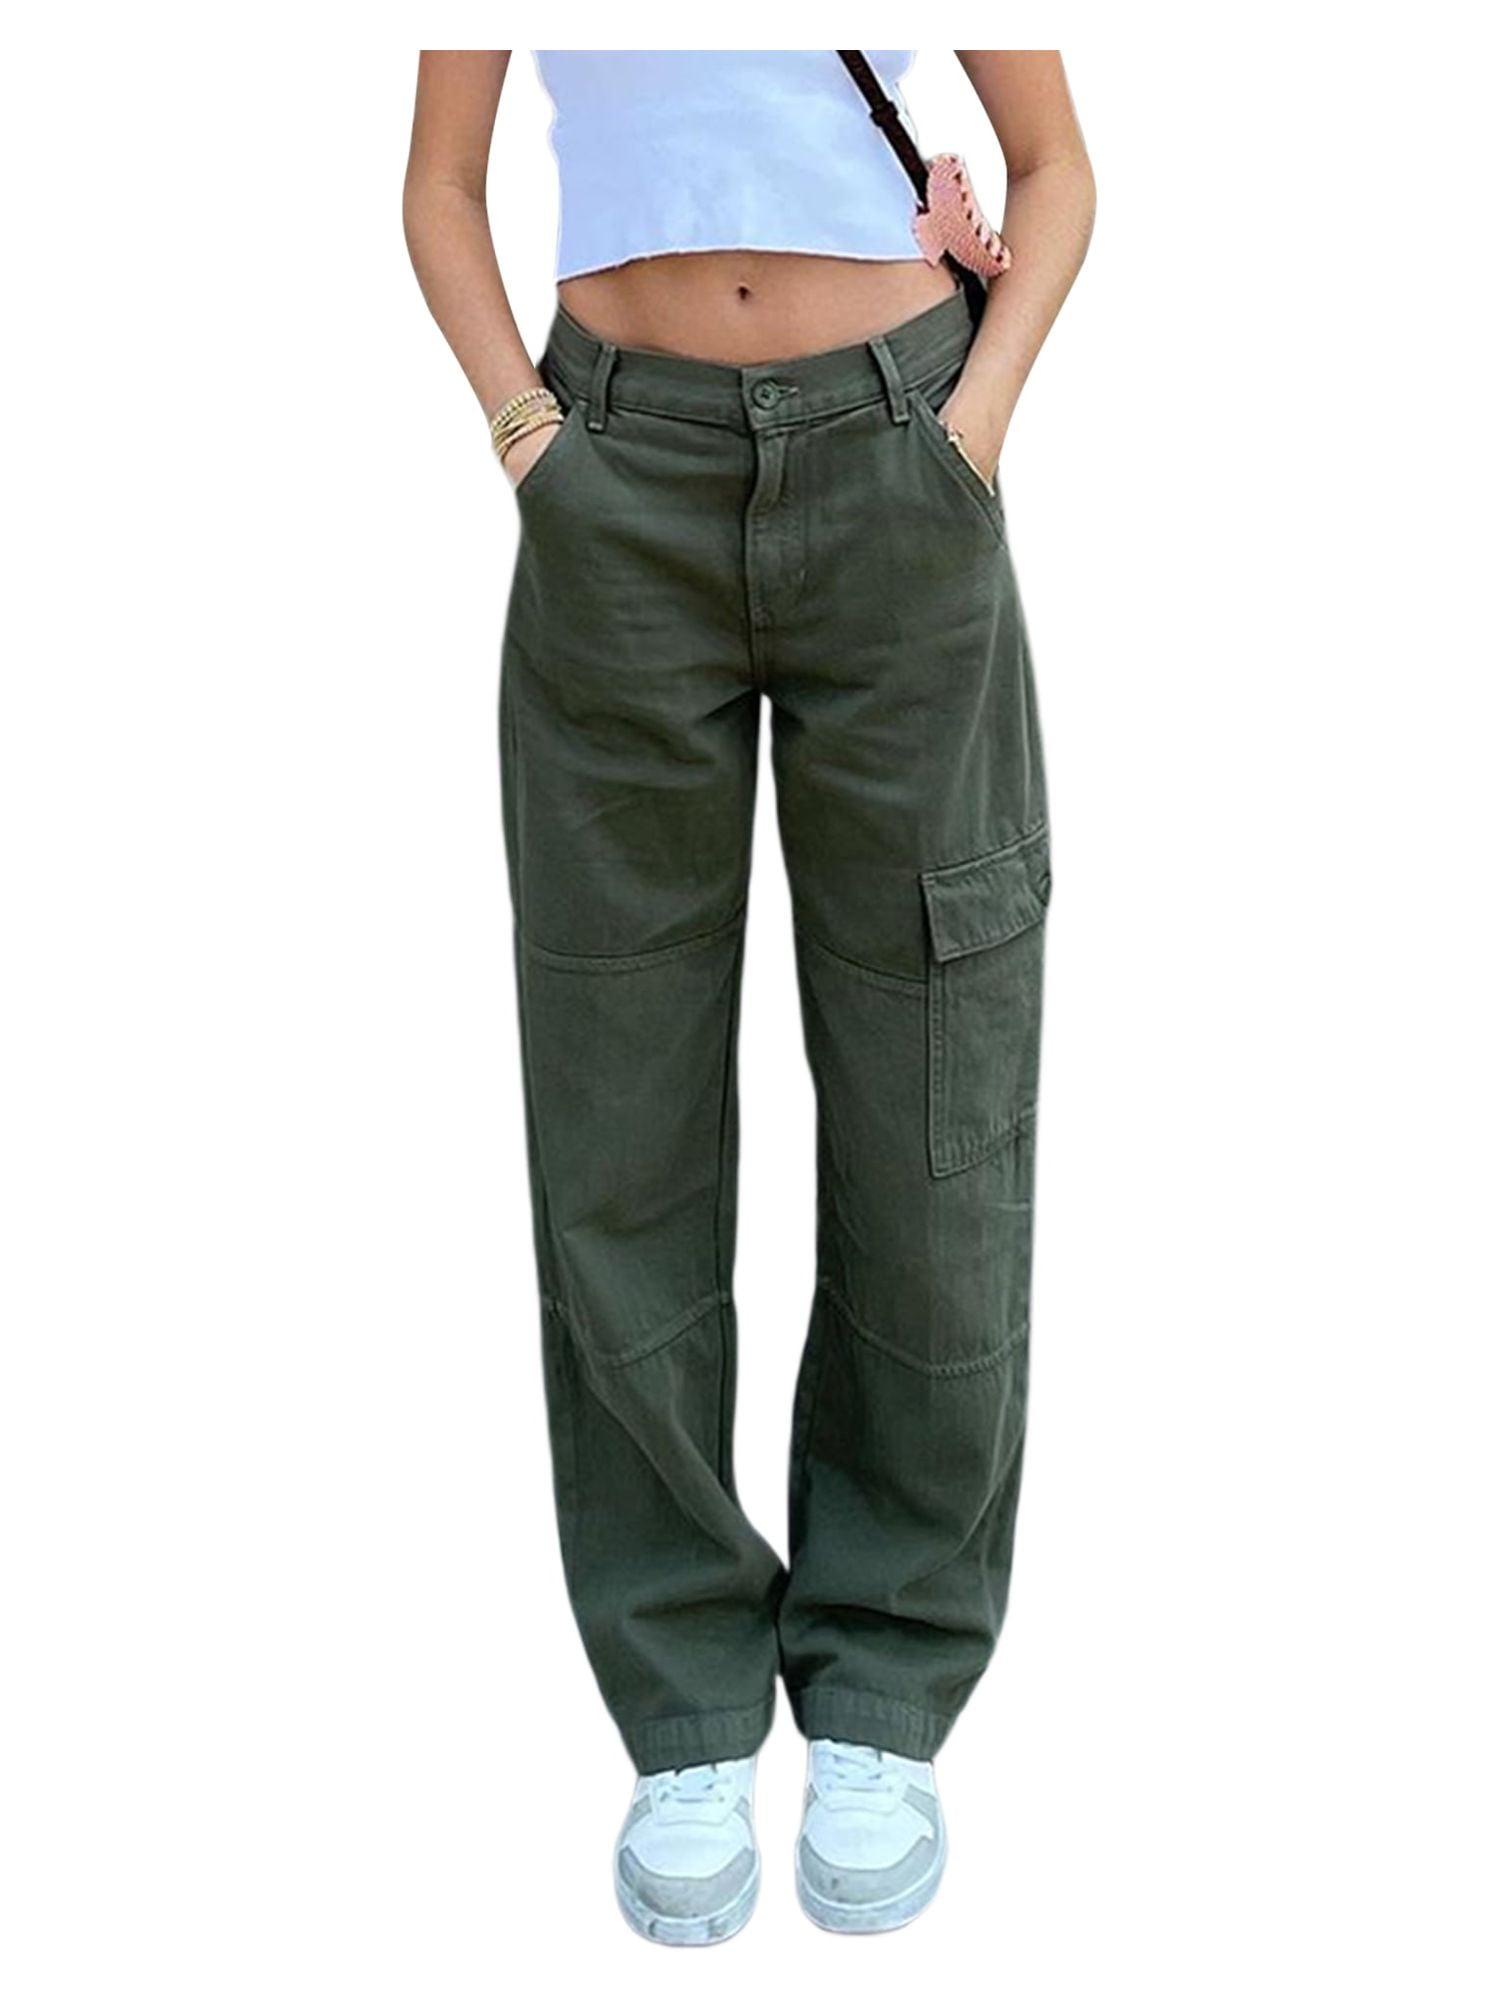 Womens High Waist Baggy Jeans Side Pocket Denim Pants Cargo Pants